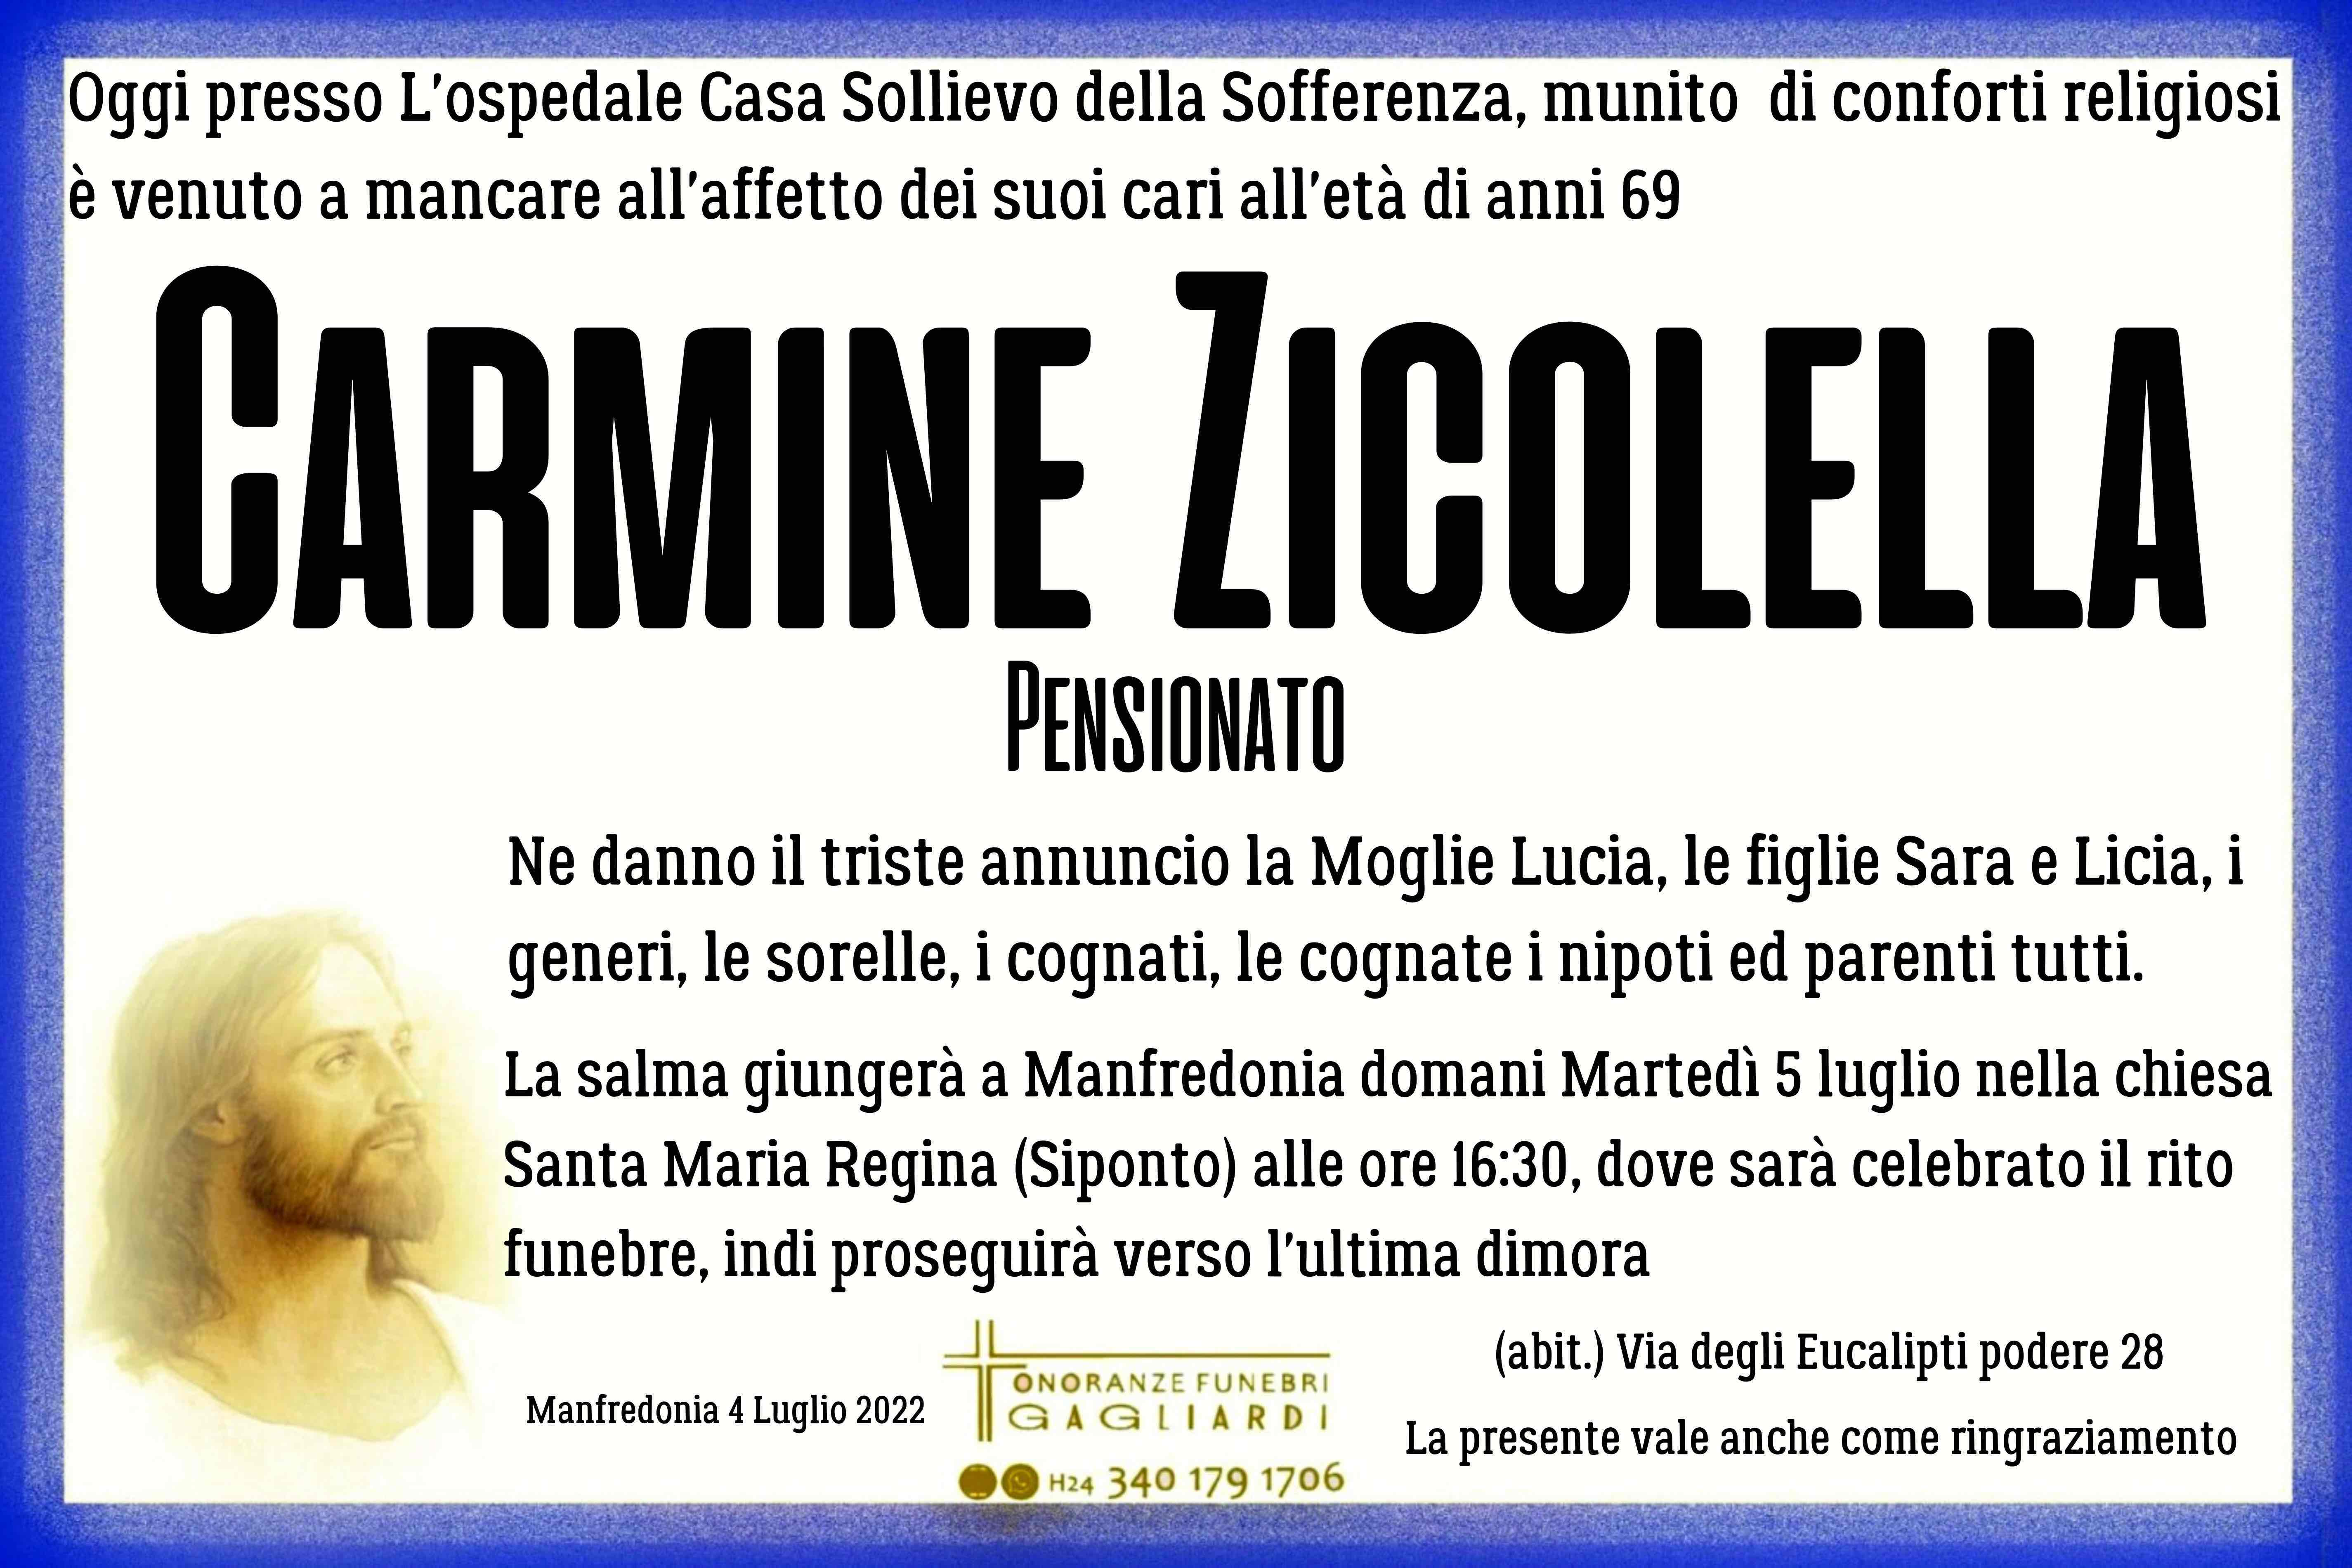 Carmine Zicolella